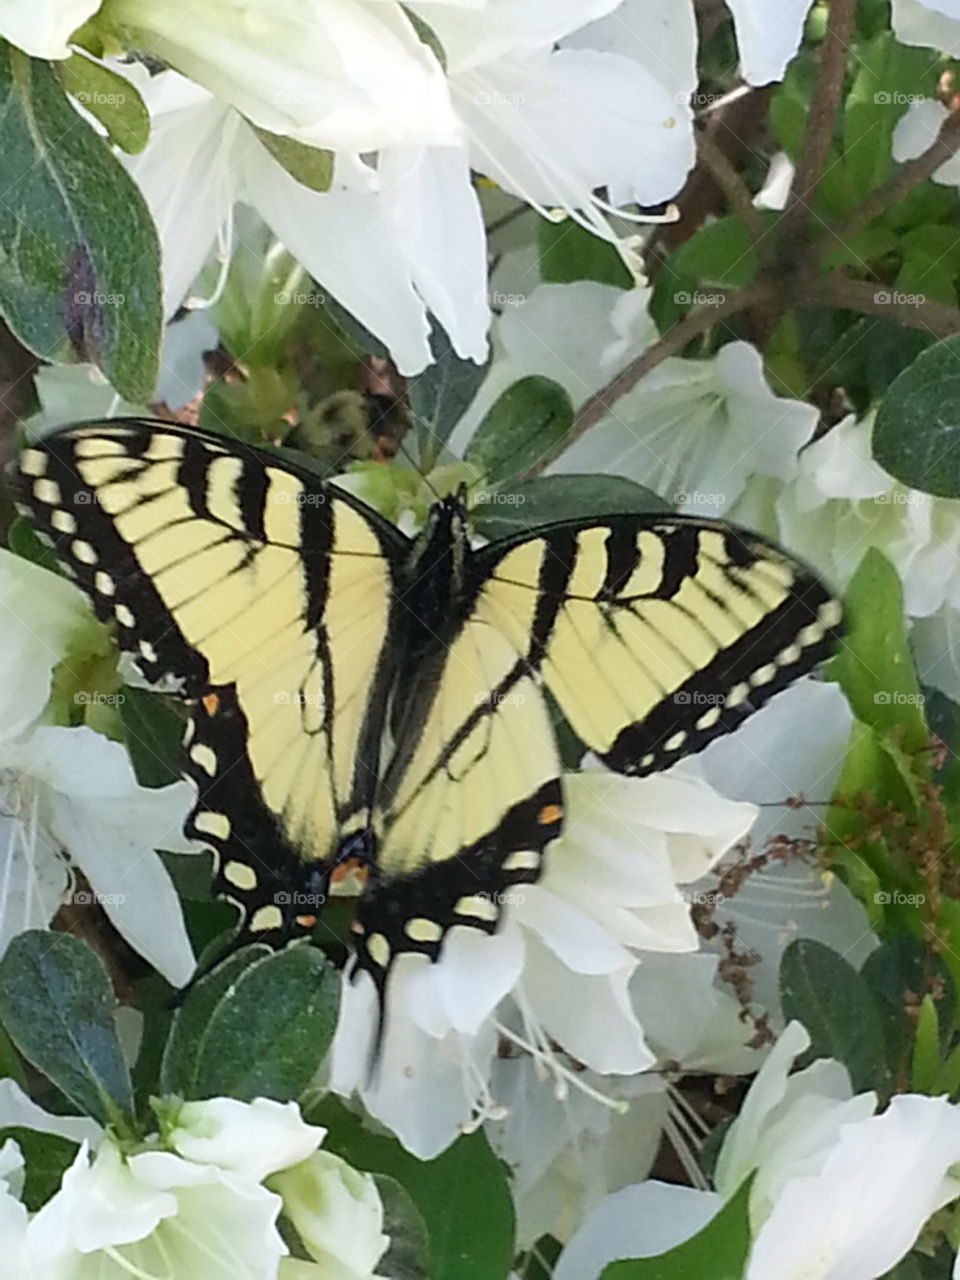 nice butterfly